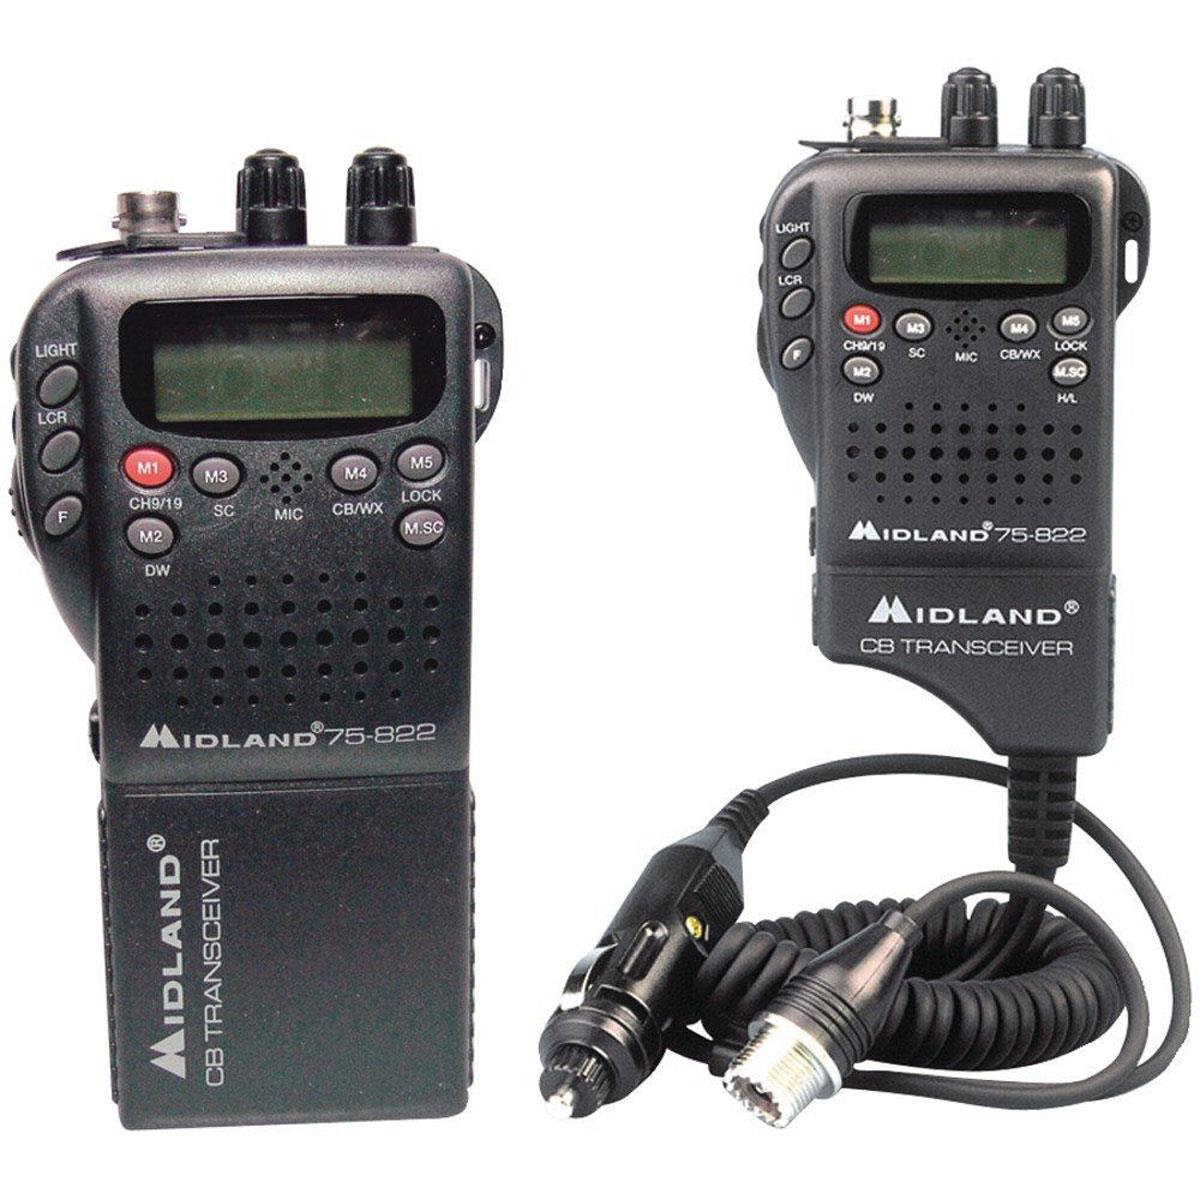 

Midland Portable/Mobile 40 Channels CB Radio